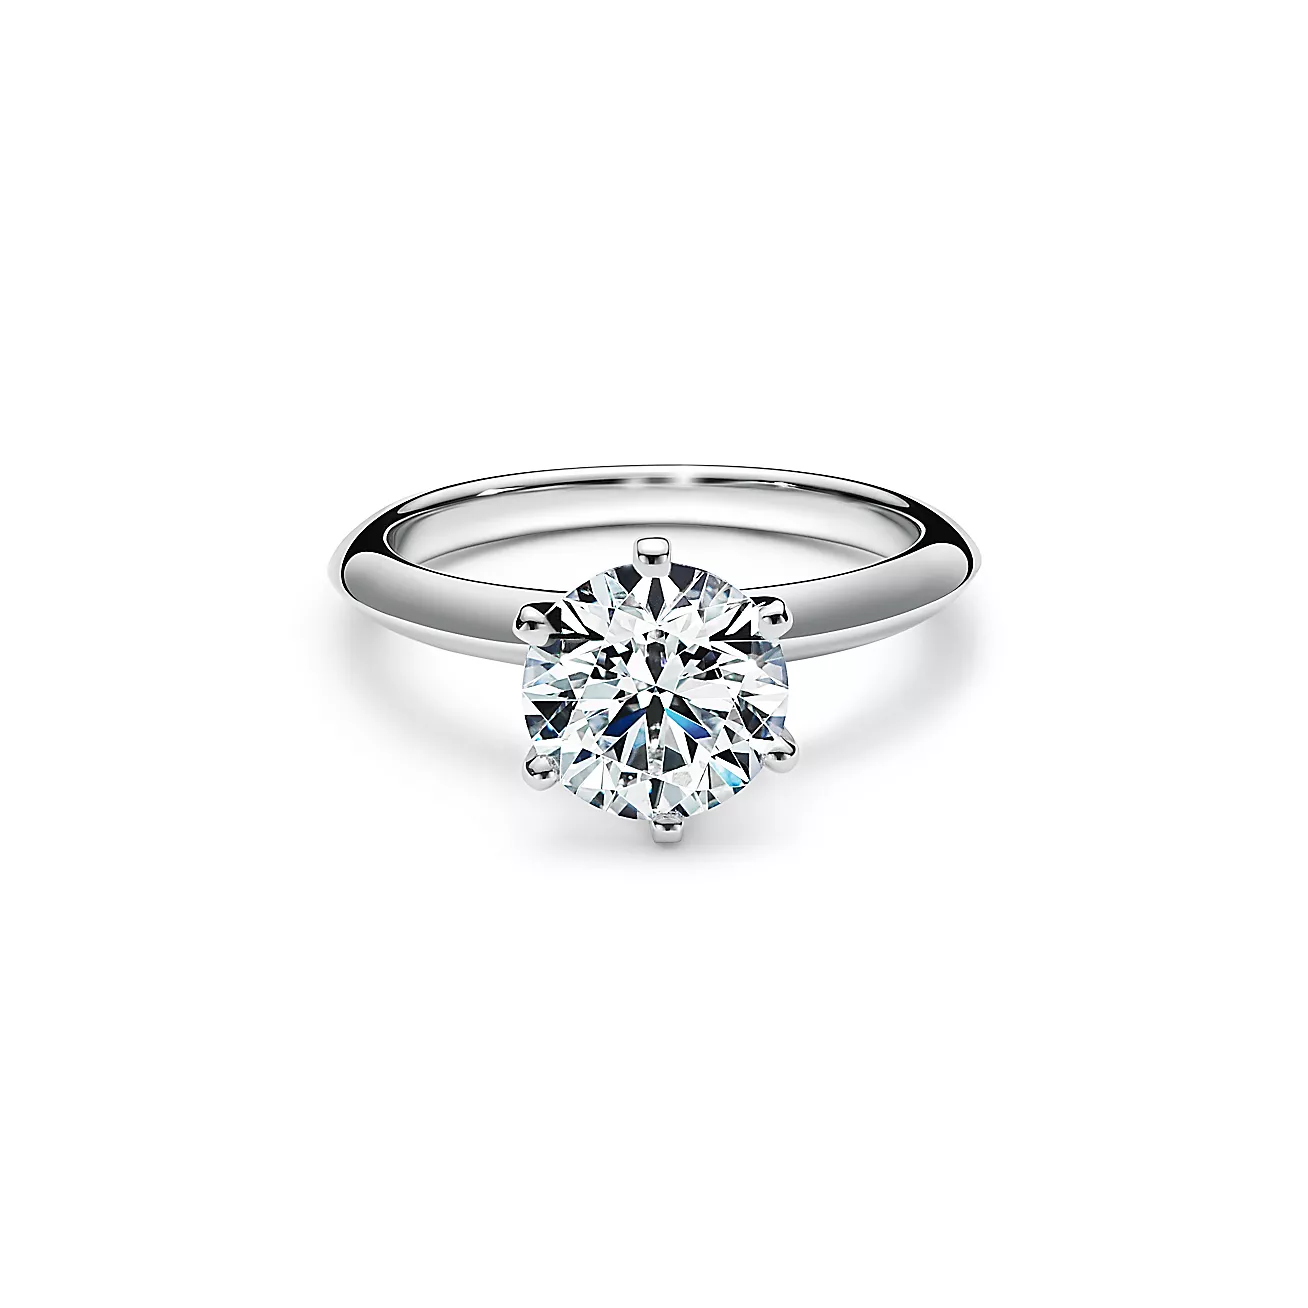 The Tiffany Setting Ring in Platinum